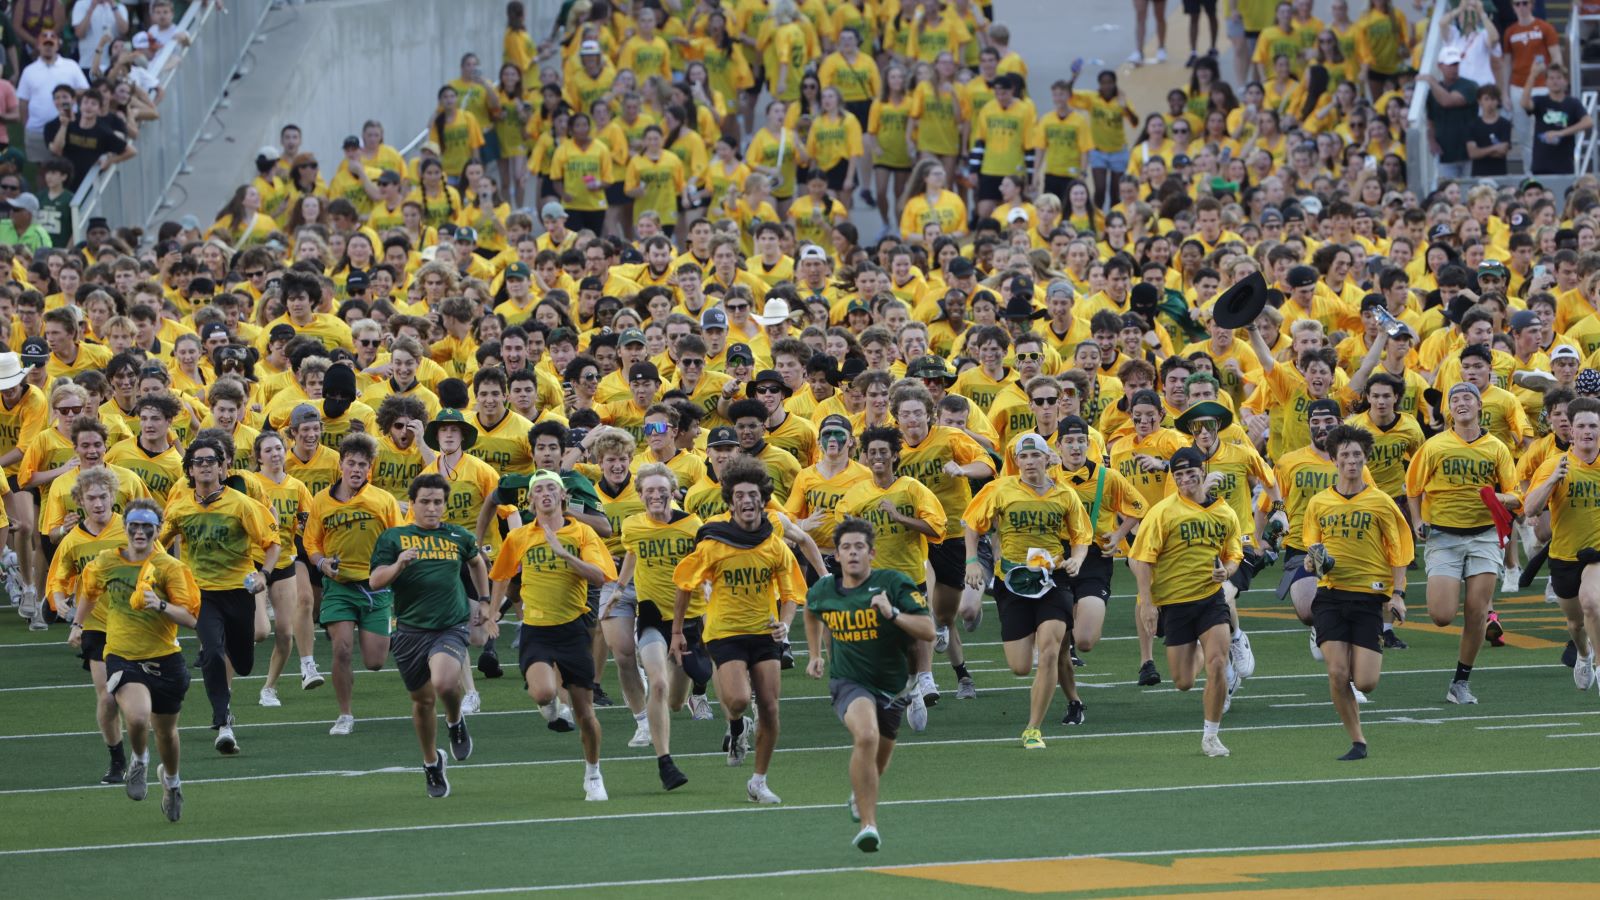 Baylor University freshman students run across the football field in their gold Baylor Line jerseys